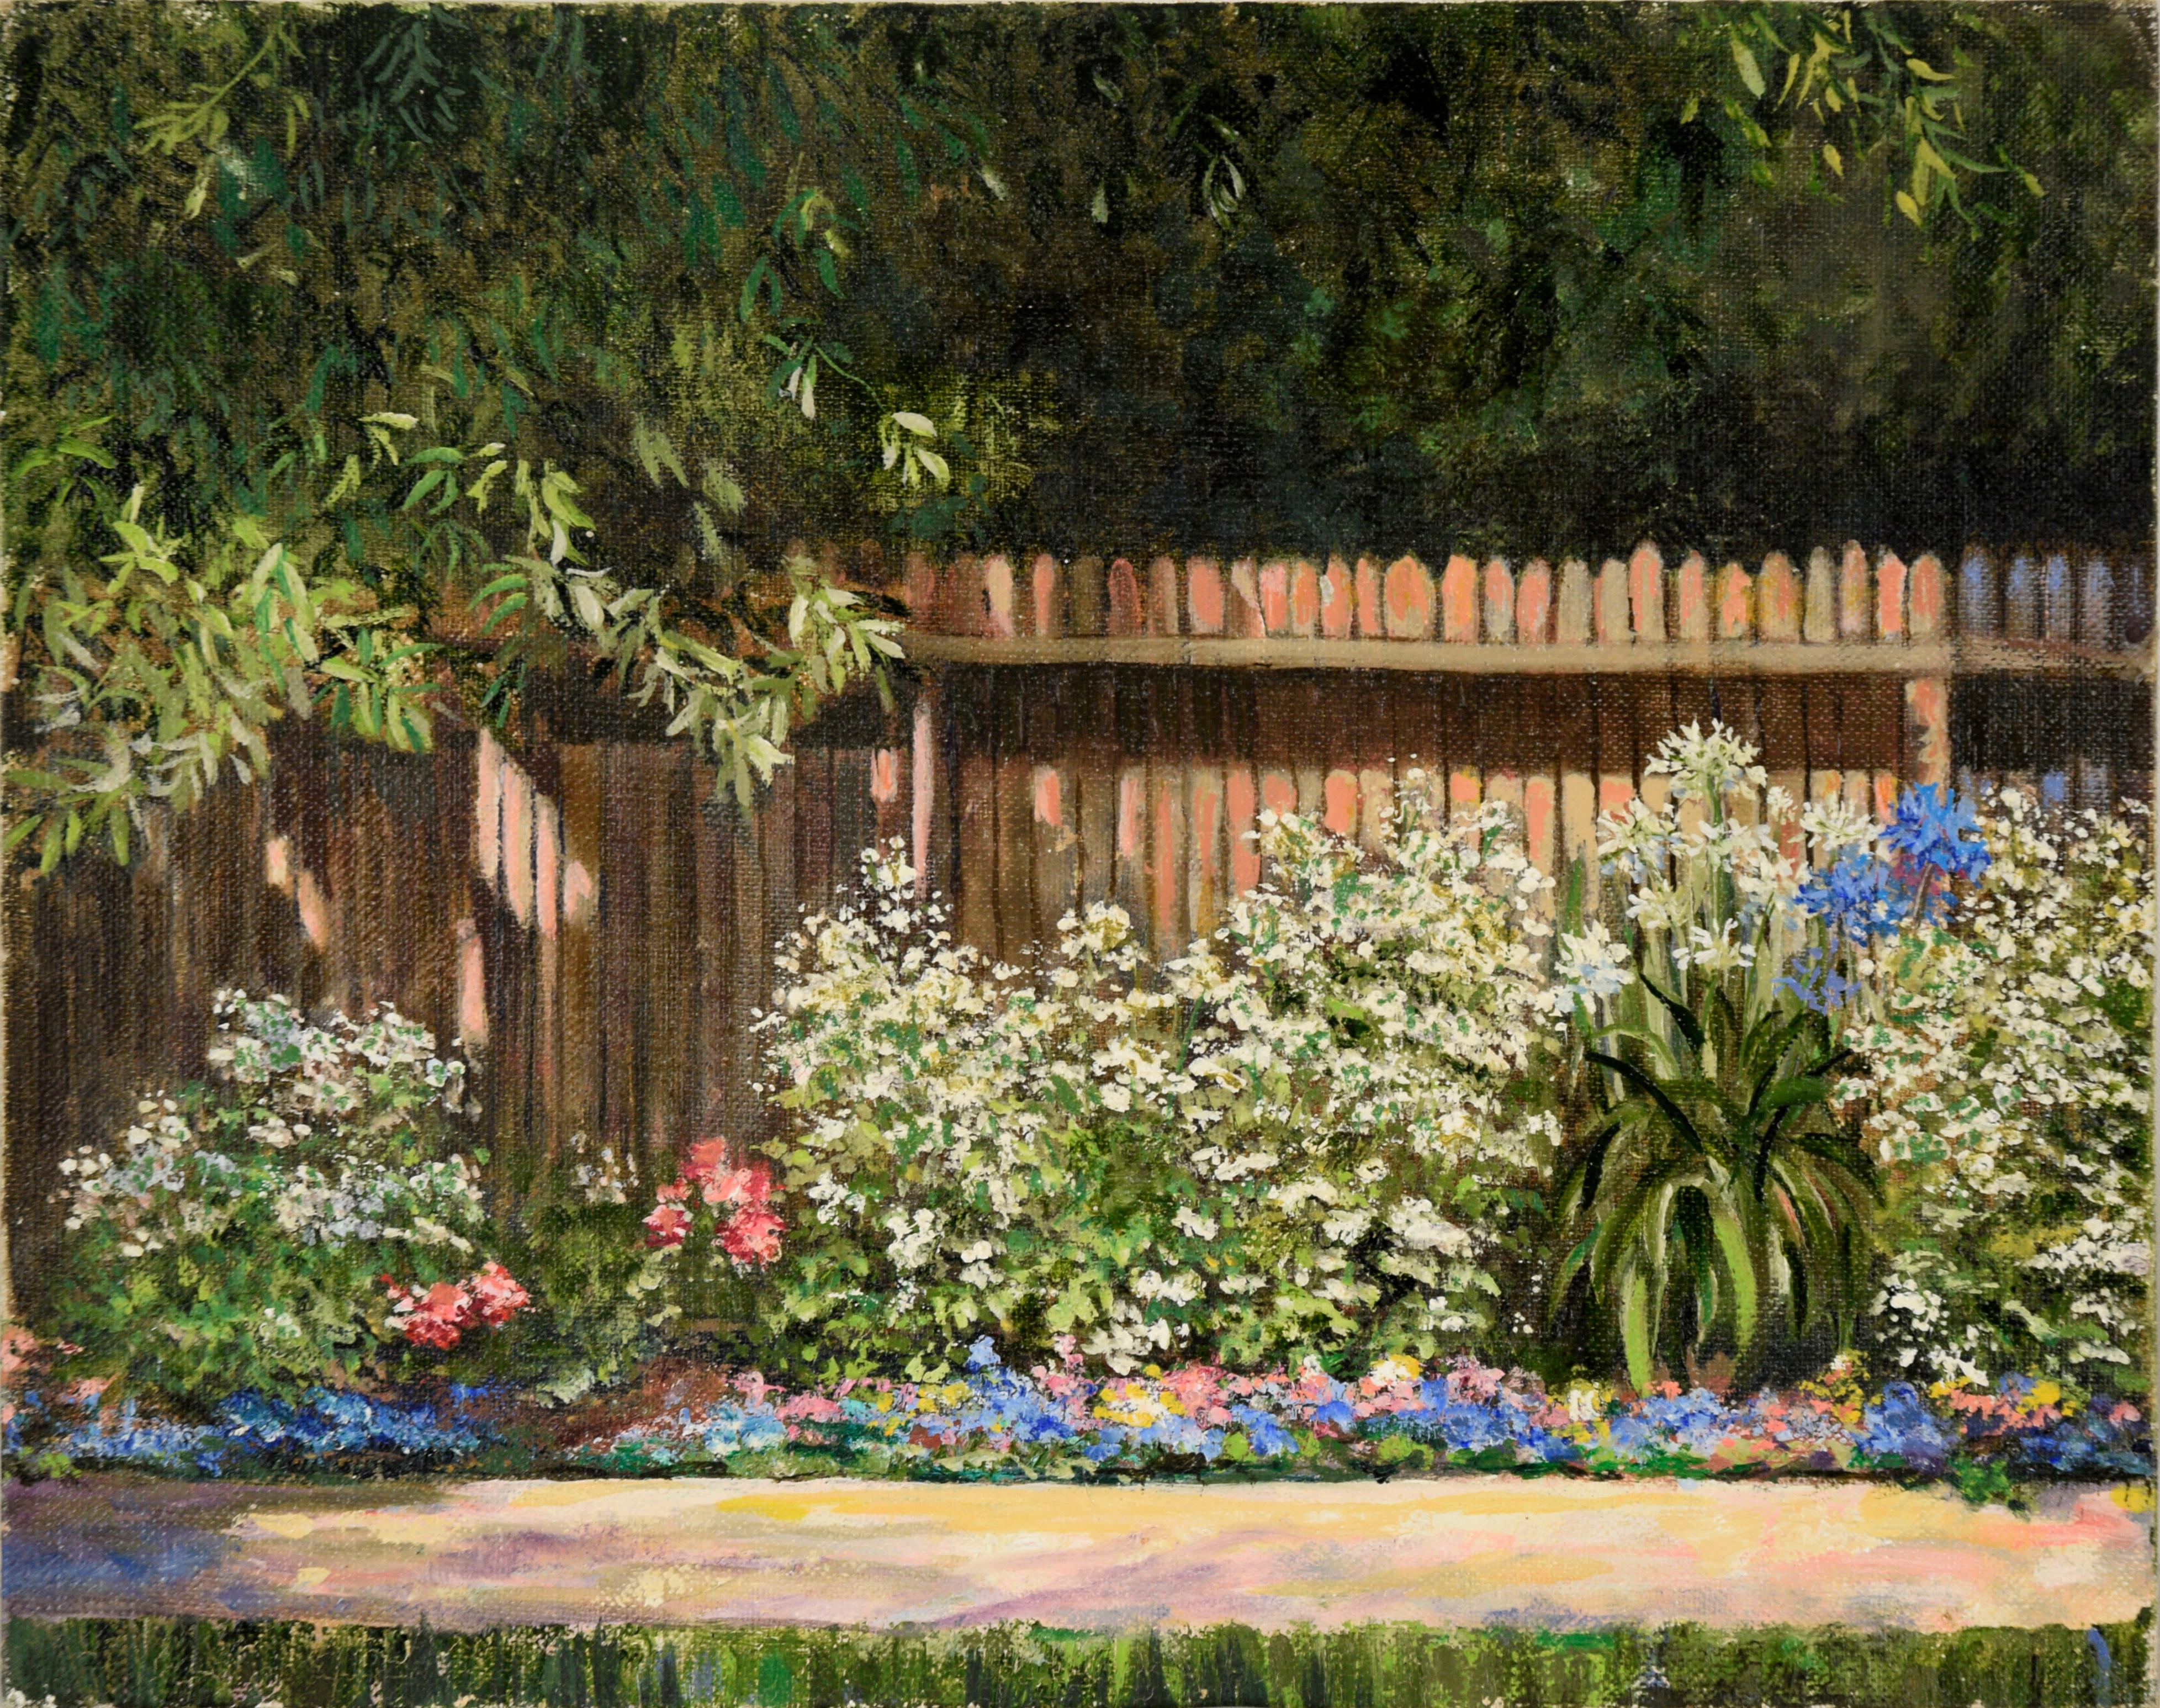 Unknown Landscape Painting - Realistic Garden Landscape - Oil on Artist's Board